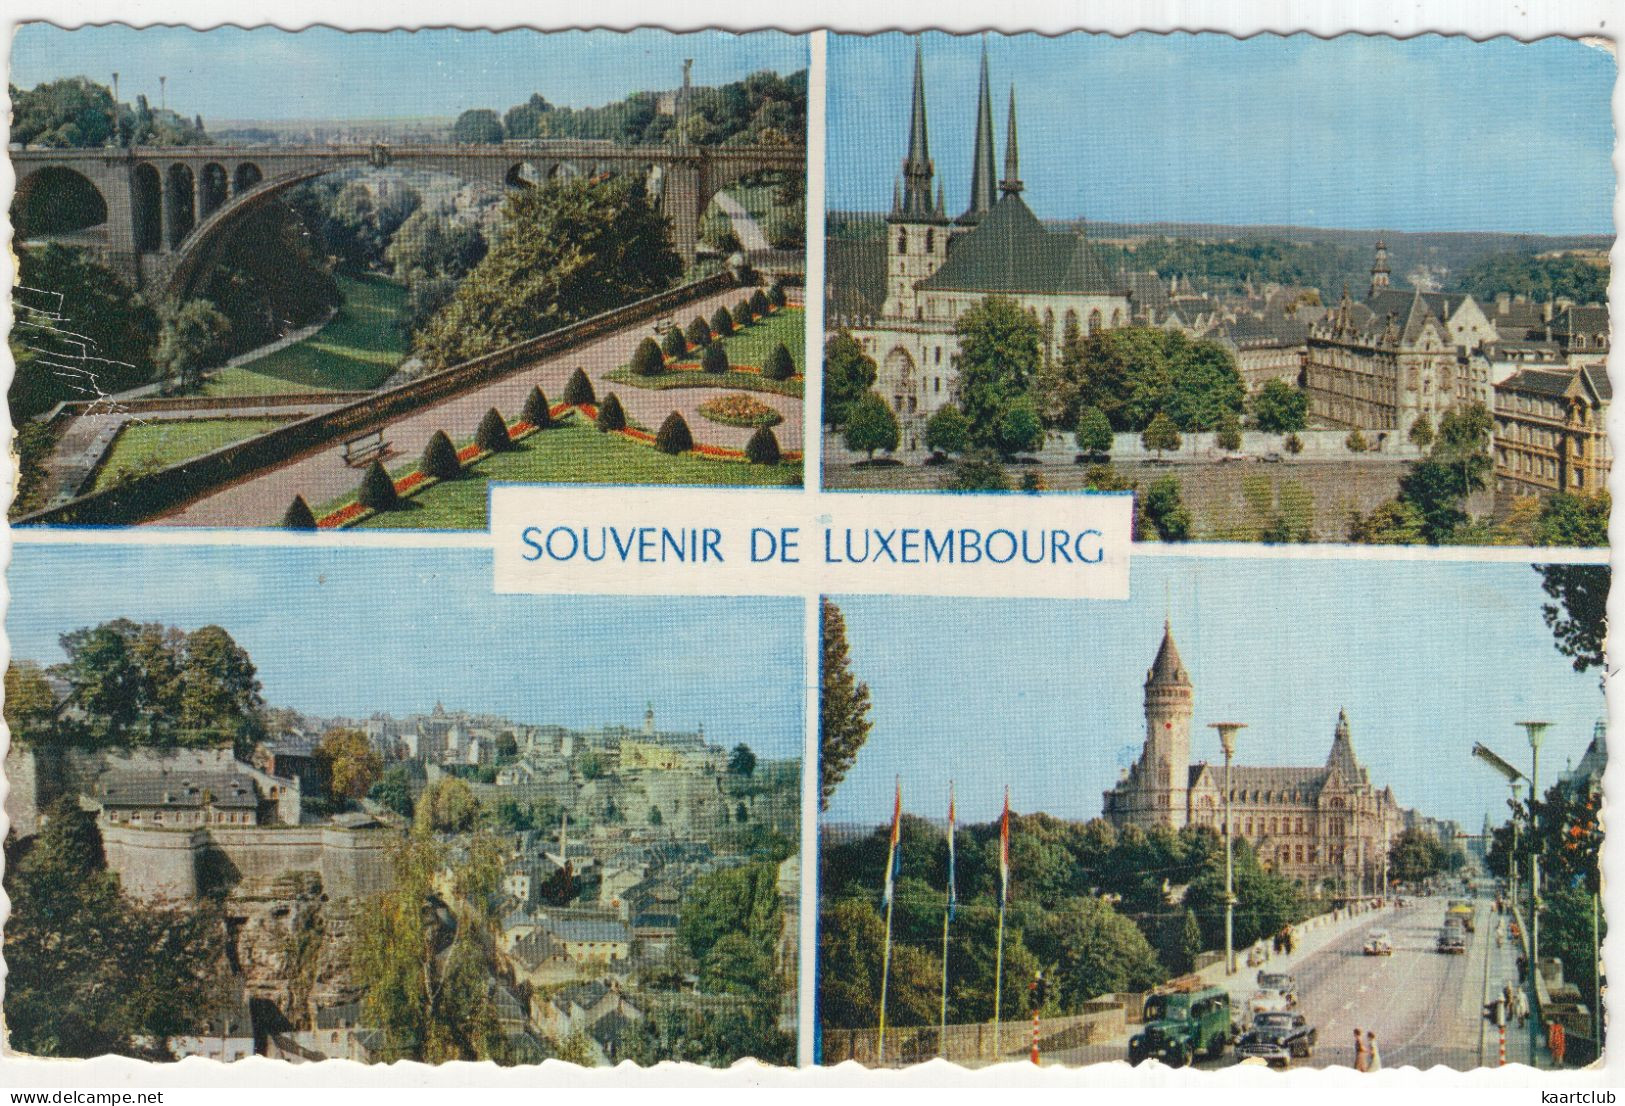 Souvenir De Luxembourg - (Luxembourg) - Luxemburgo - Ciudad